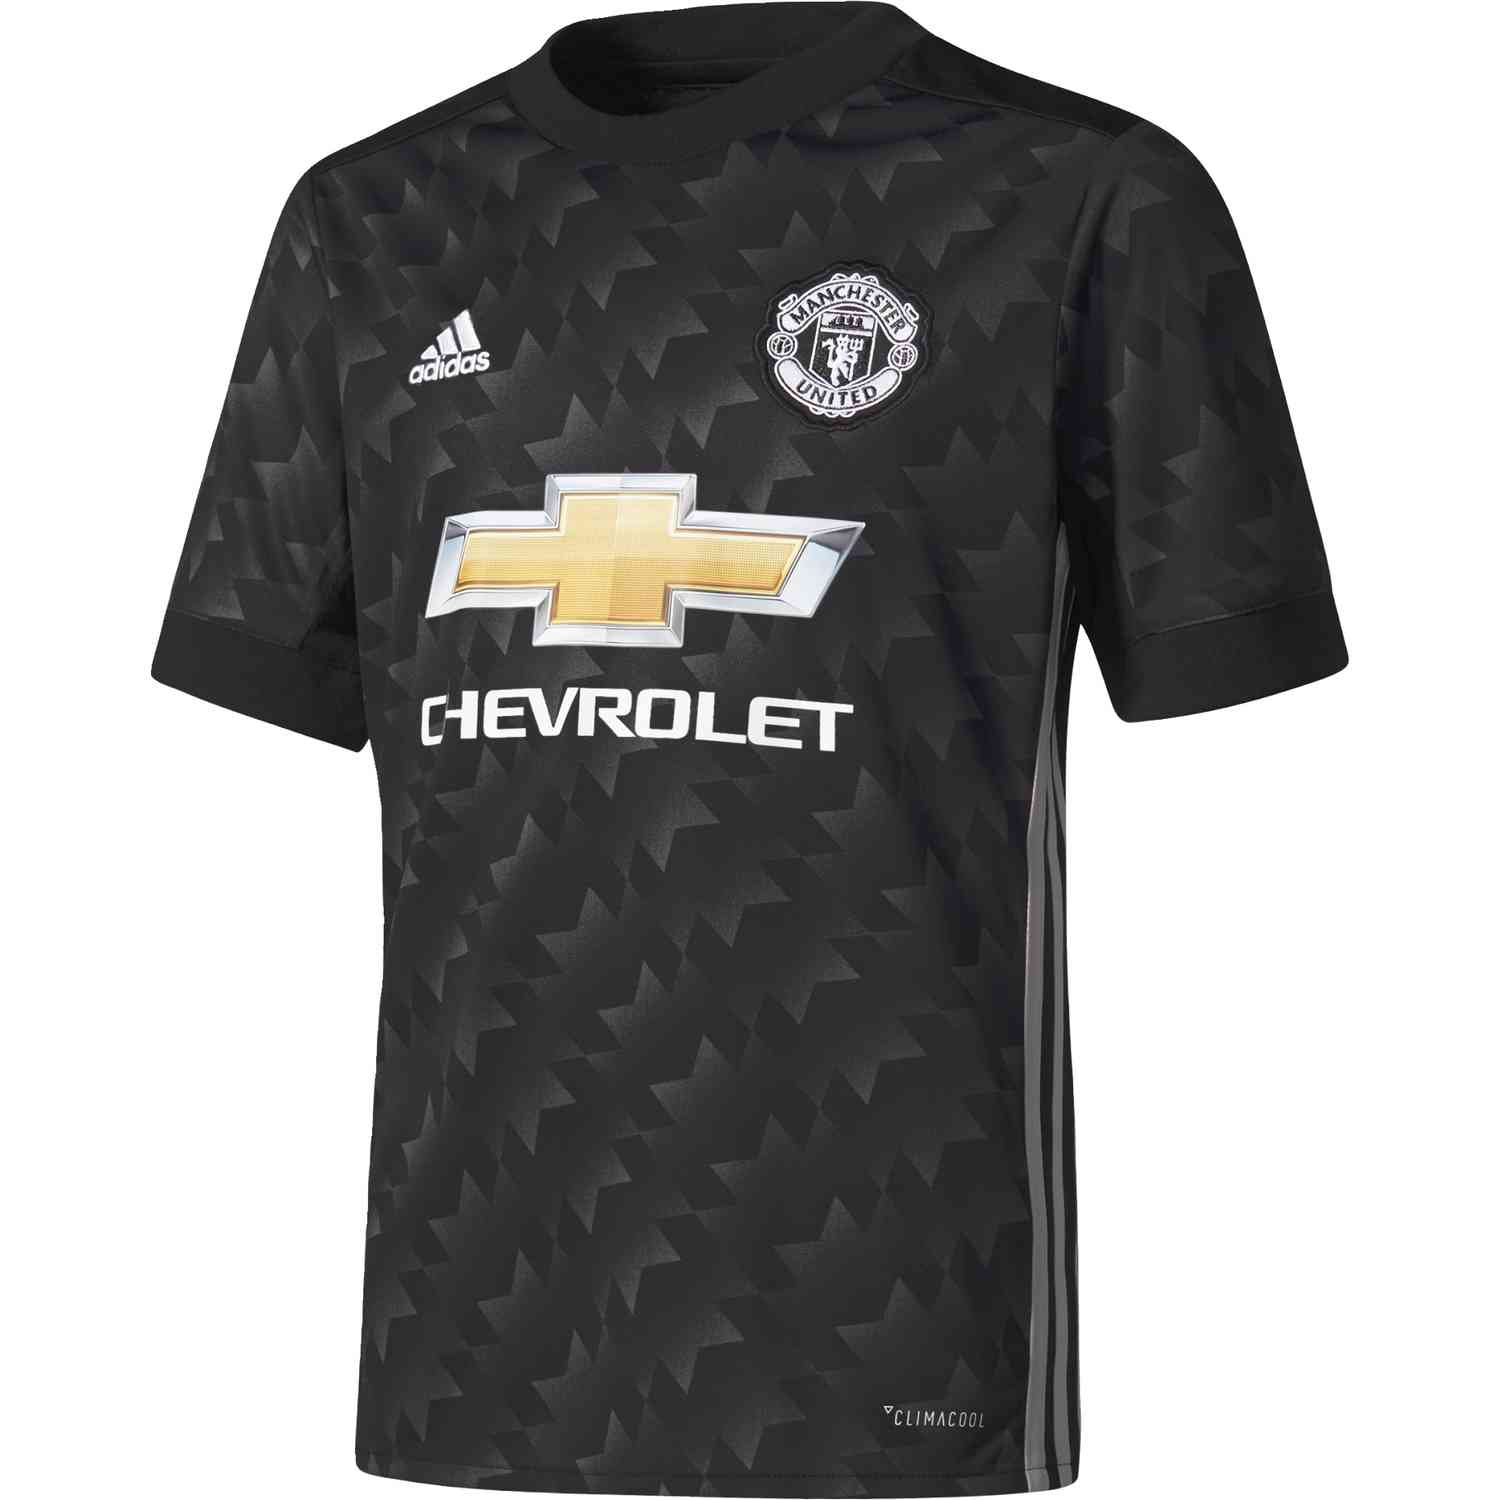 2017/18 adidas Kids Manchester United Away Jersey - SoccerPro.com